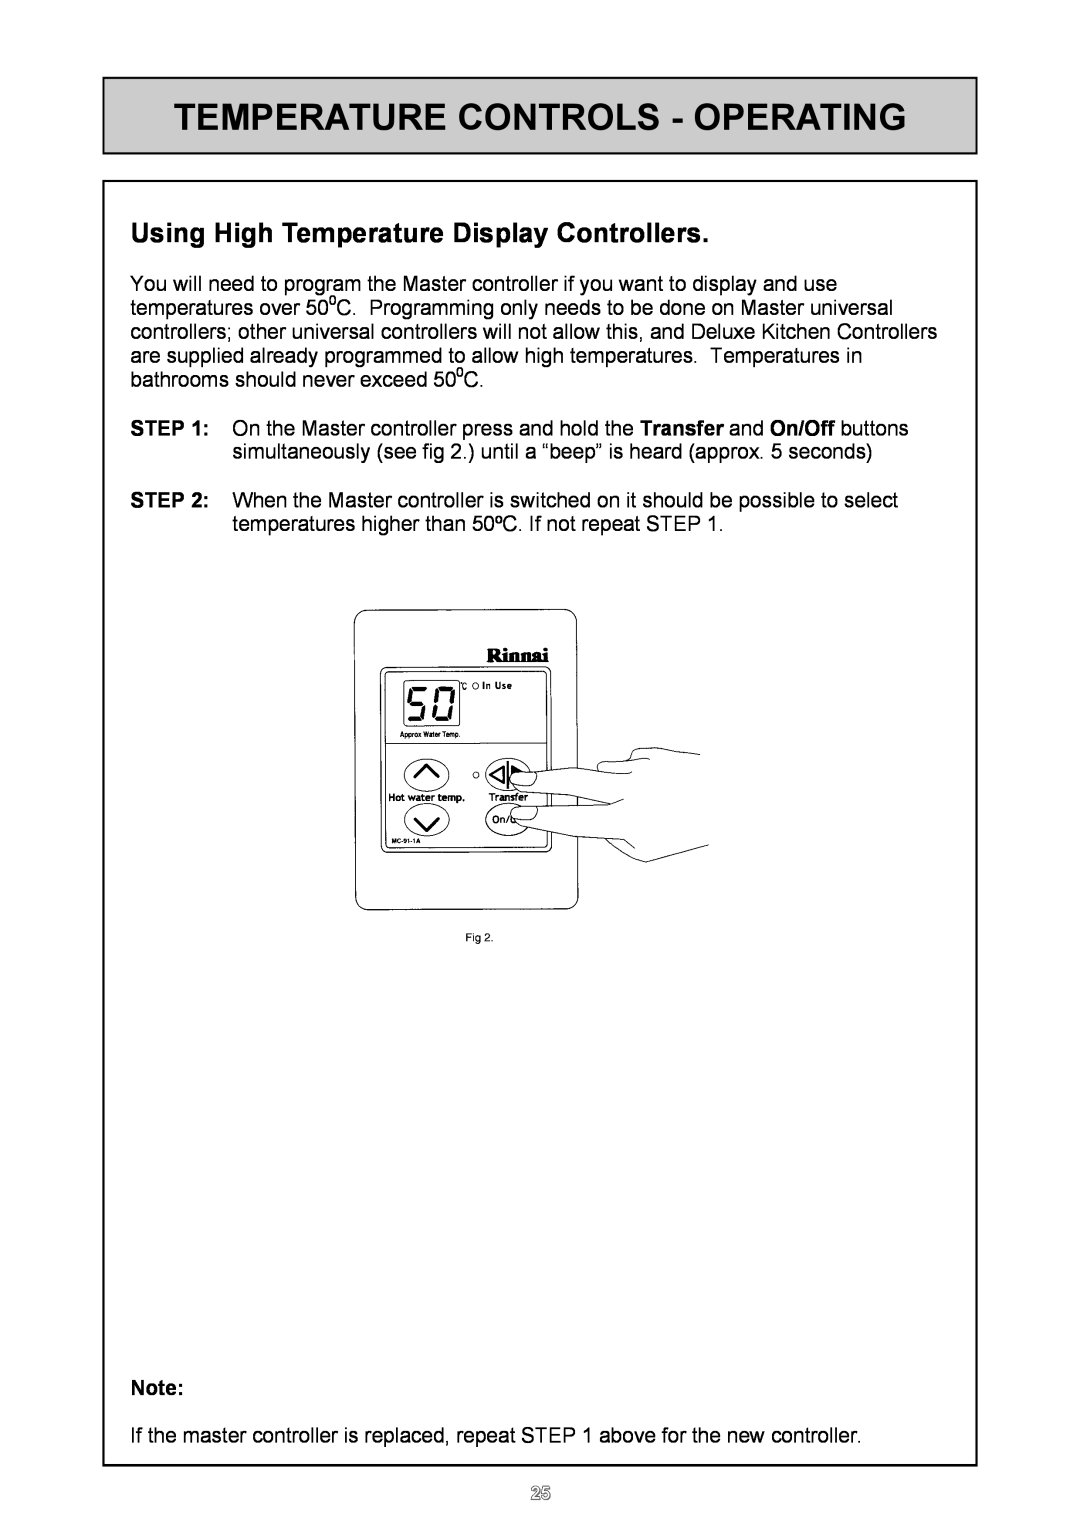 Rinnai 26i, HD50i user manual Using High Temperature Display Controllers, Temperature Controls - Operating 